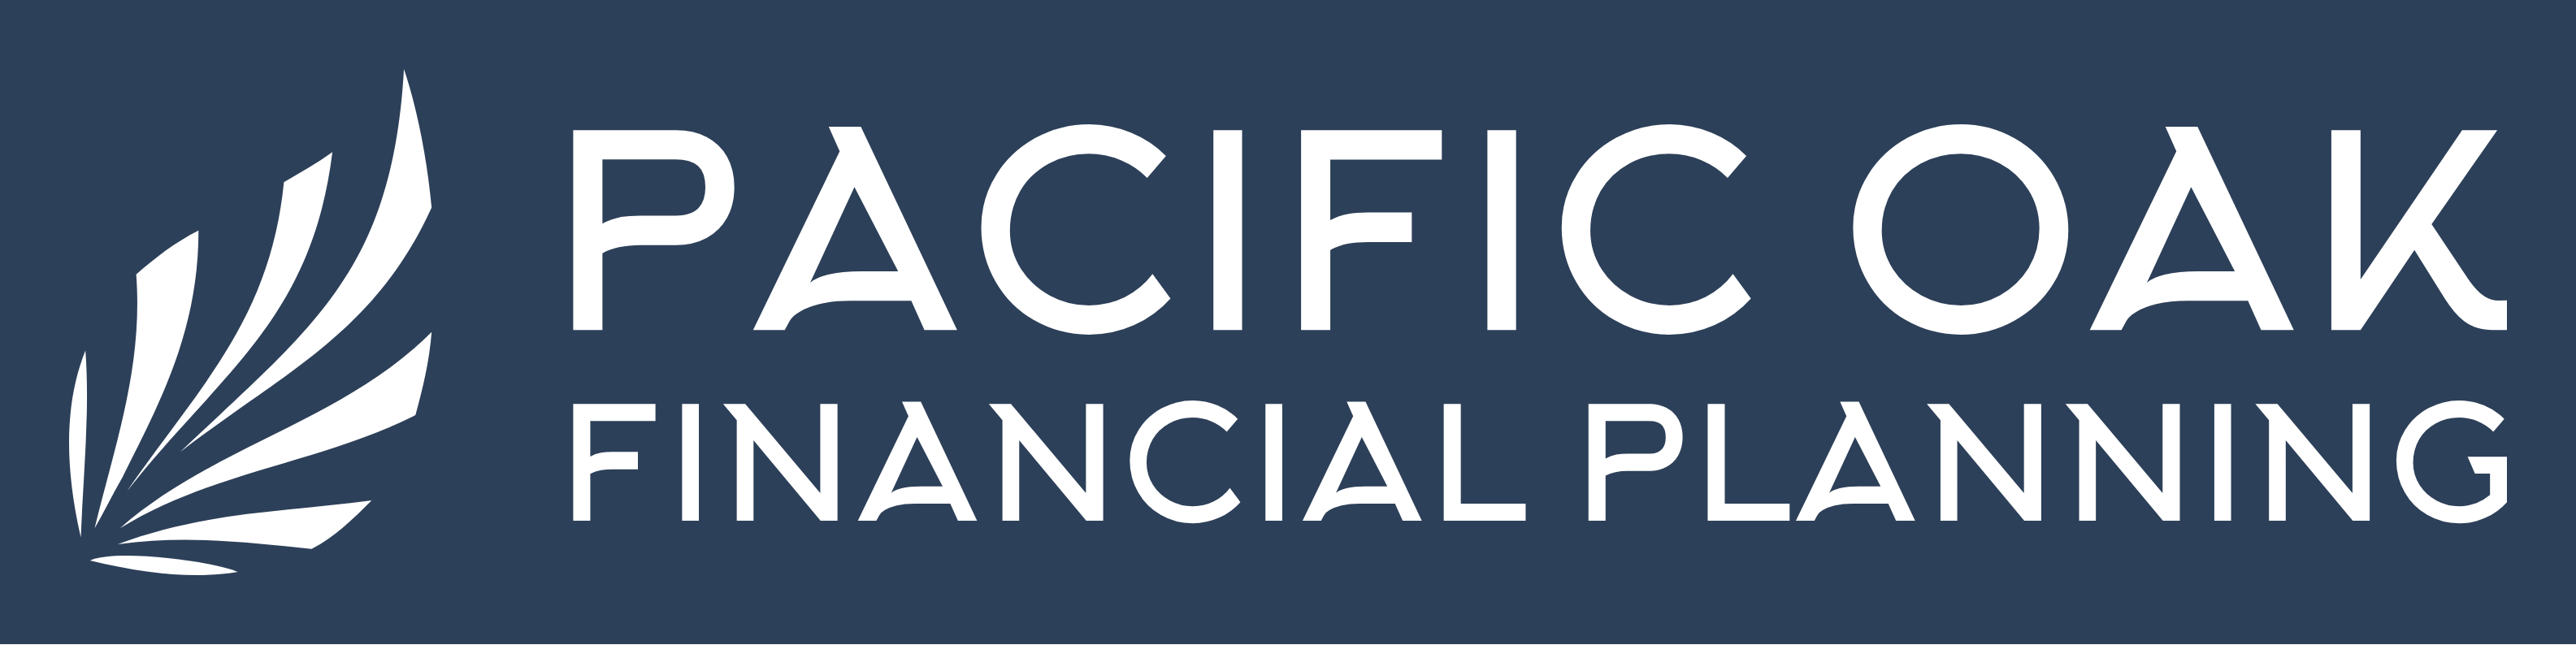 Pacific Oak Financial Planning